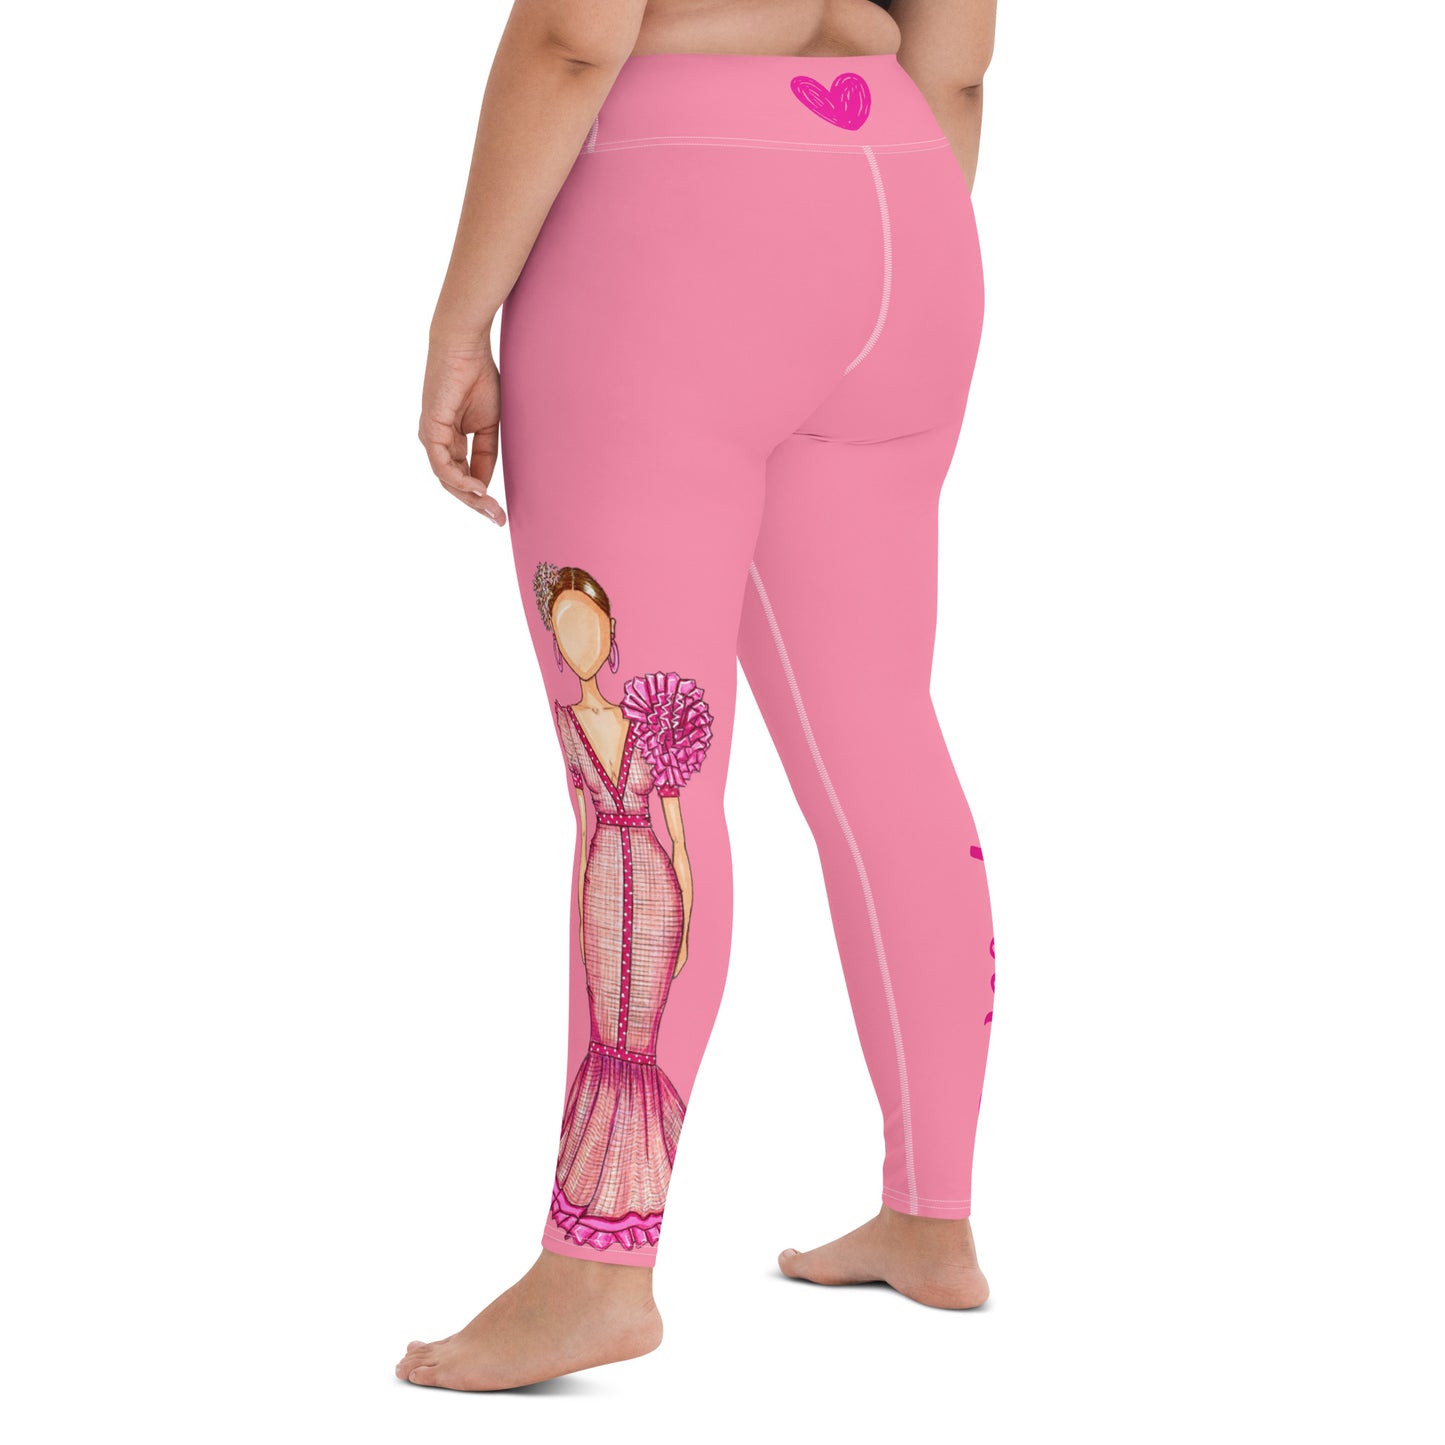 Flamenco Dancer Leggings, pink high waisted yoga leggings with a pink dress - IllustrArte